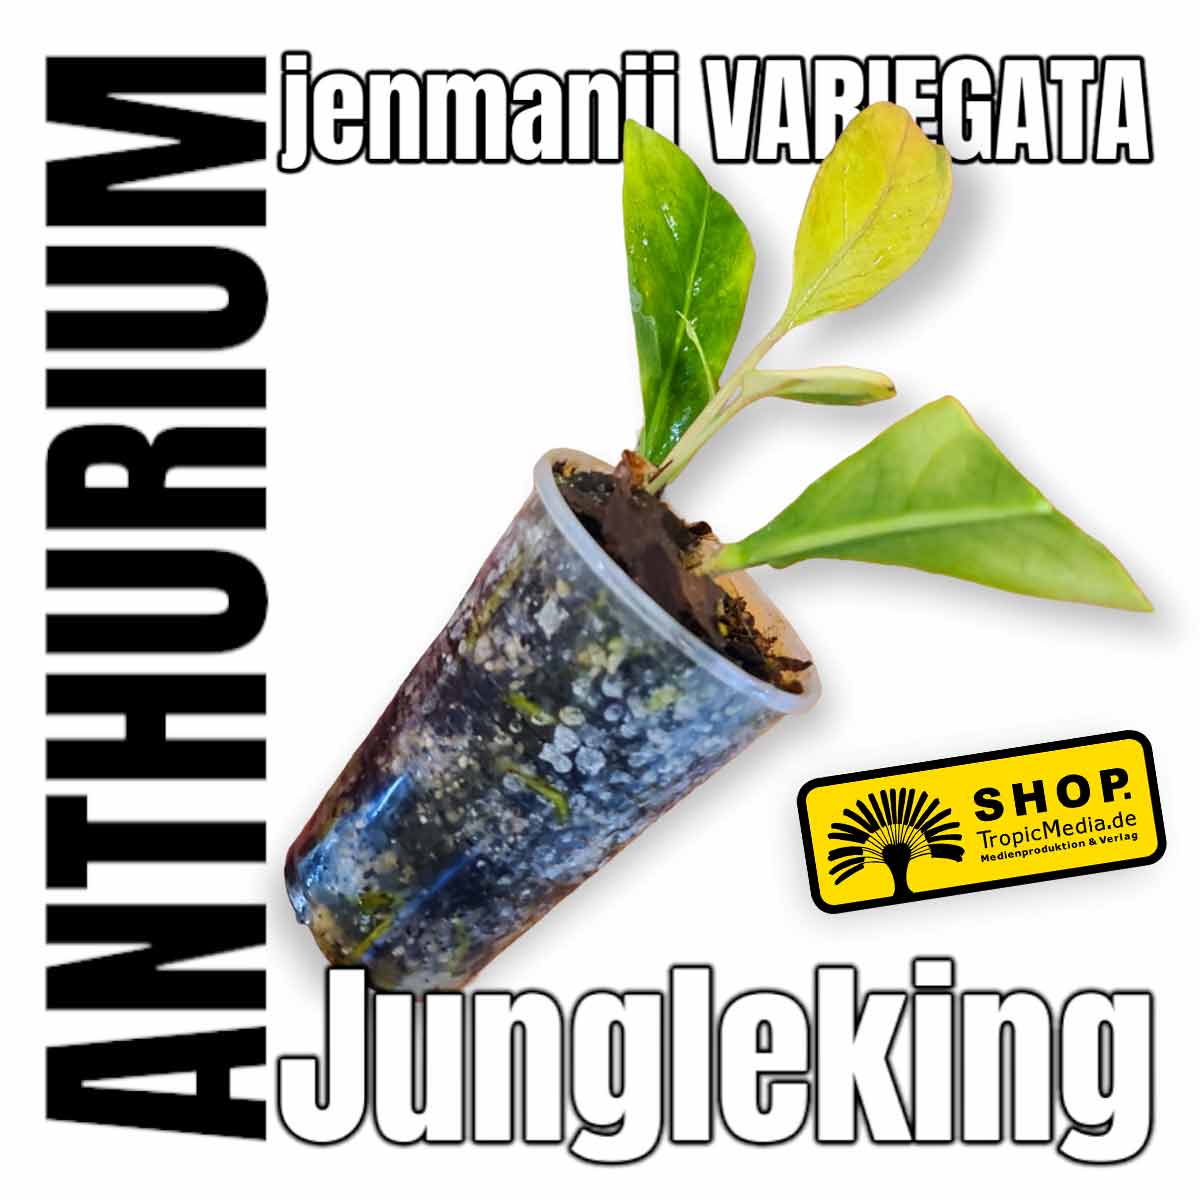 Anthurium jenmanii 100% Variegata aka Jungle King